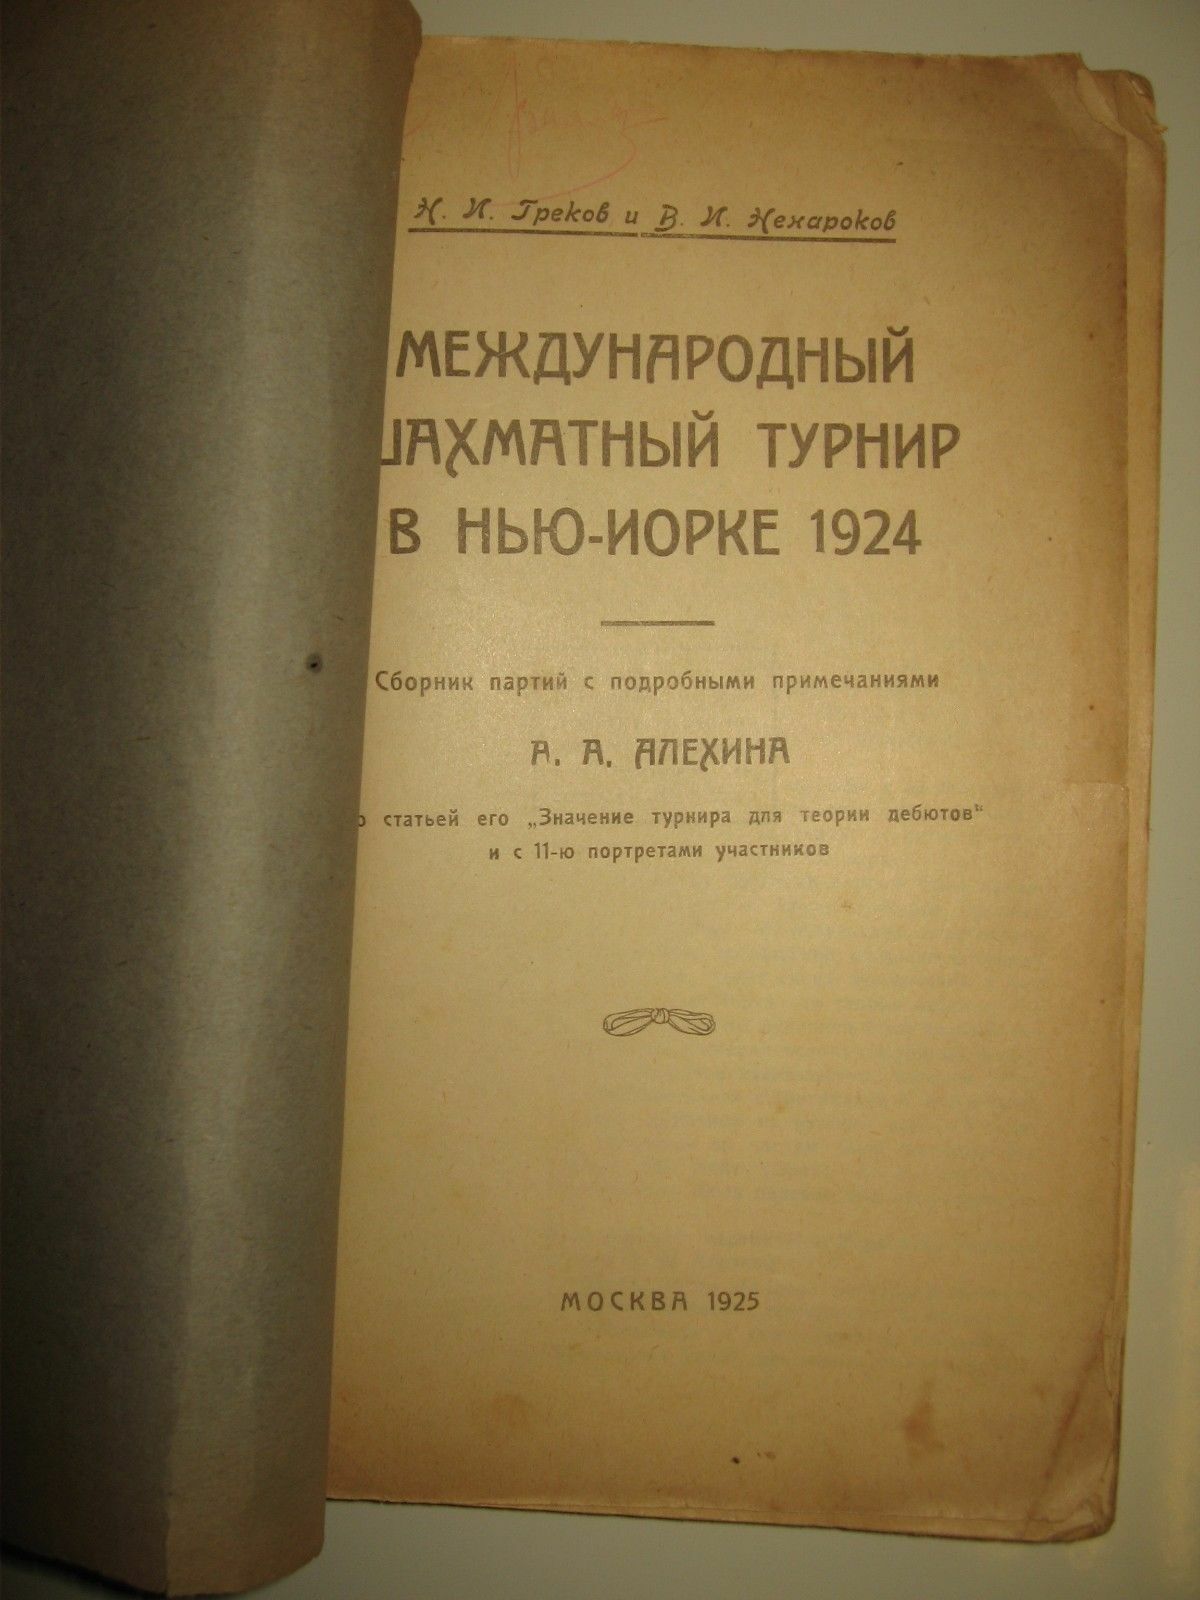 11072.Chess Book: Grekov, Nenarokov. International Chess Tournament in New York 1924